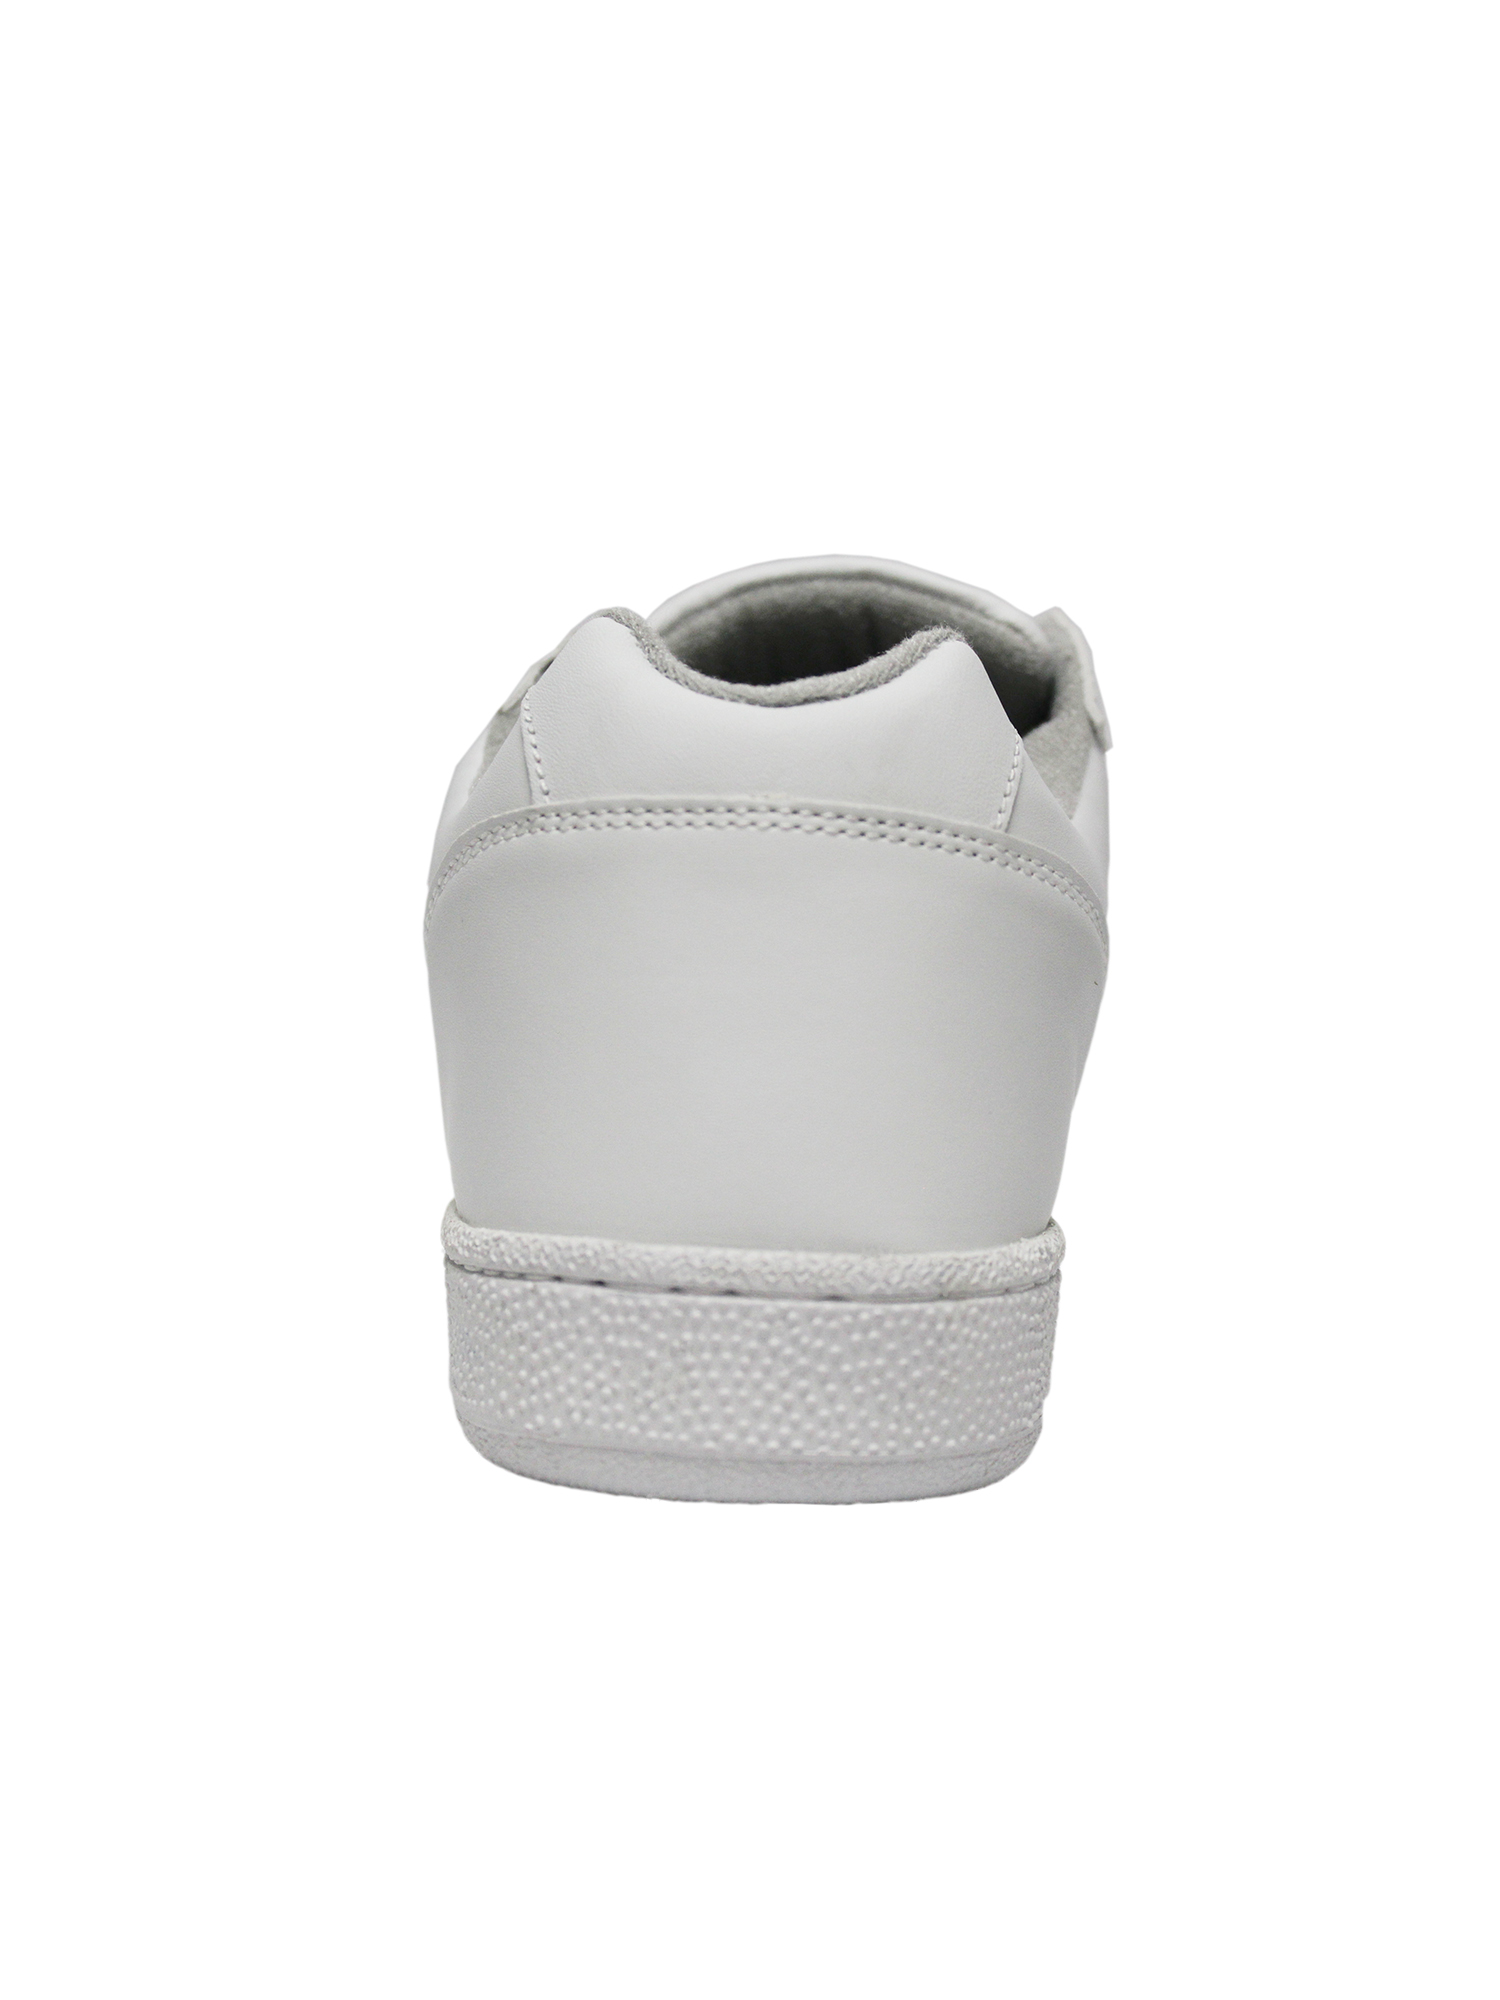 Tanleewa Men's Leather Strap Sneakers Lightweight Hook and Loop Walking Shoe Size 7.5 Adult Male - image 5 of 5